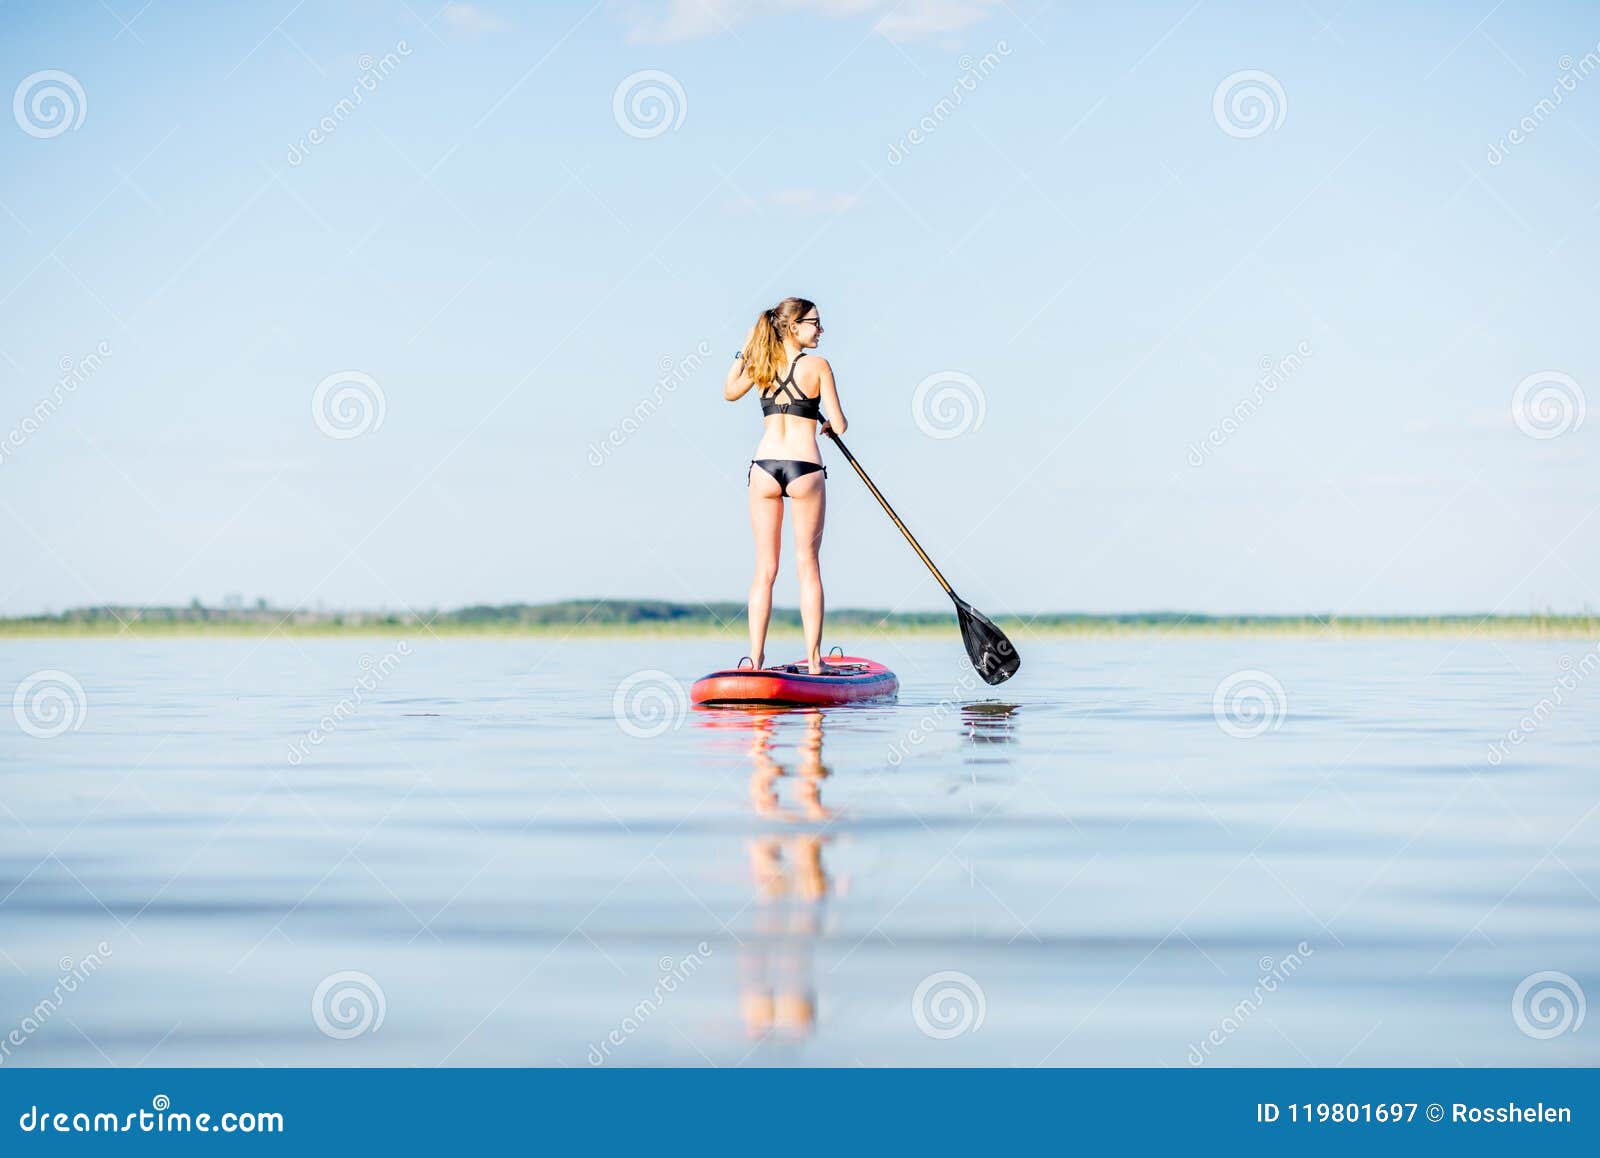 Woman Paddleboarding on the Lake Stock Image - Image of activity ...